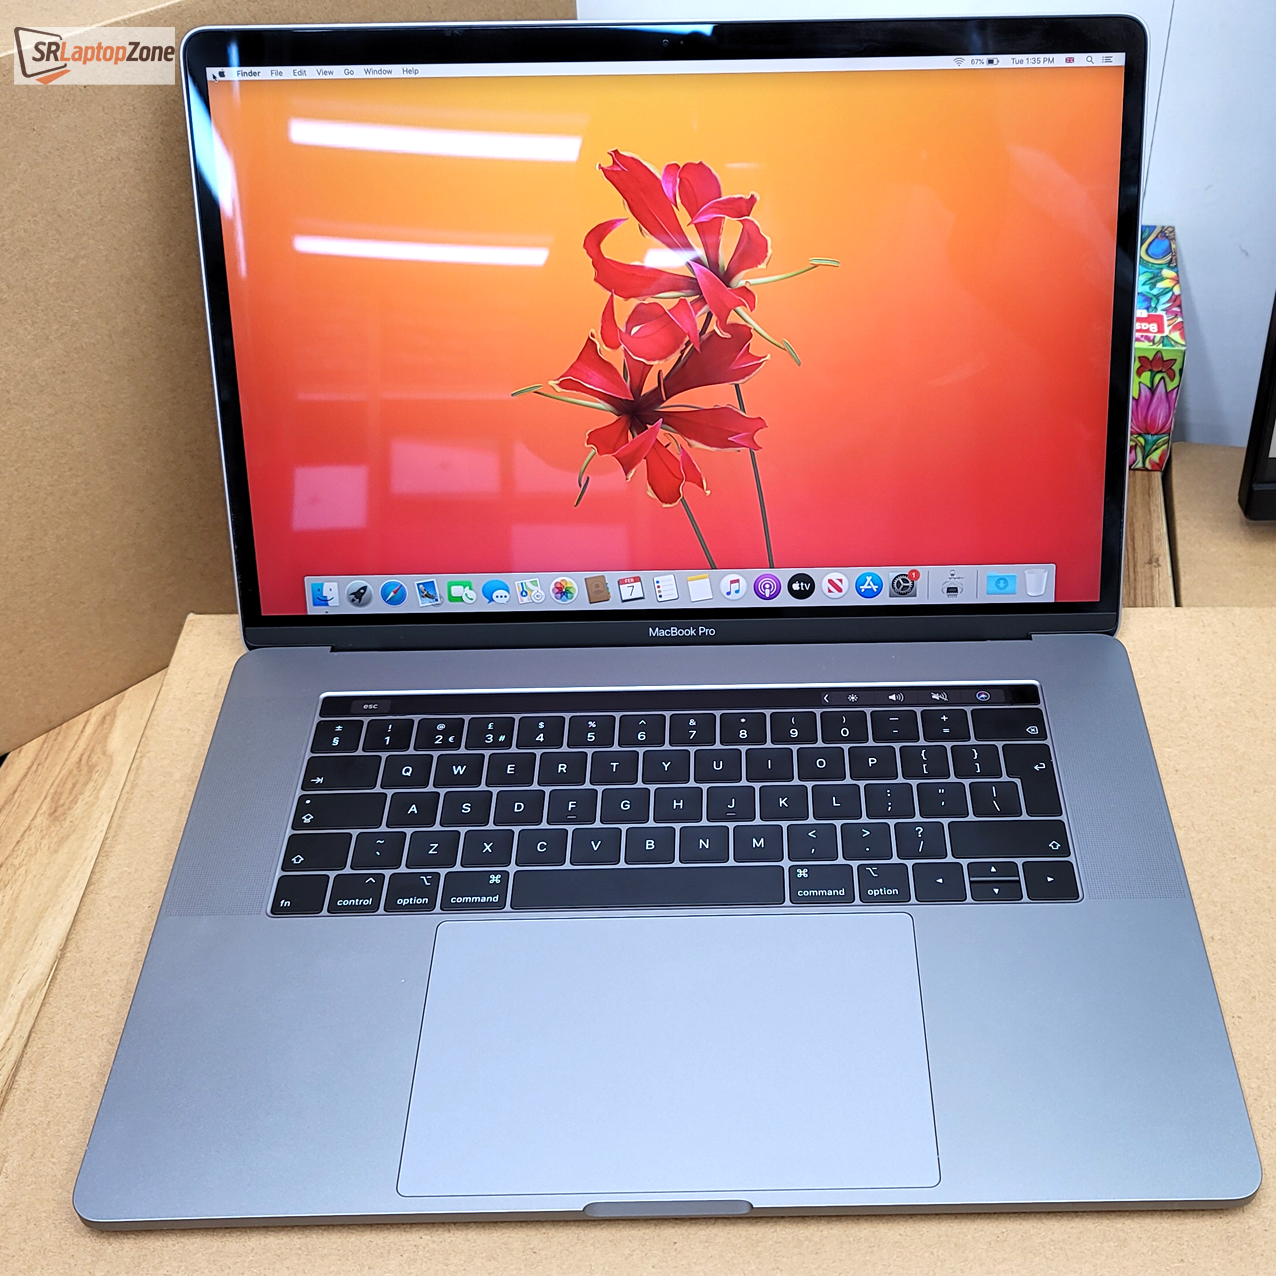 Apple MacBook Pro 2019 Core i7 2.60 Ghz Processor, 16GB RAM 512GB SSD 15 Inch Retina Display With TouchBar